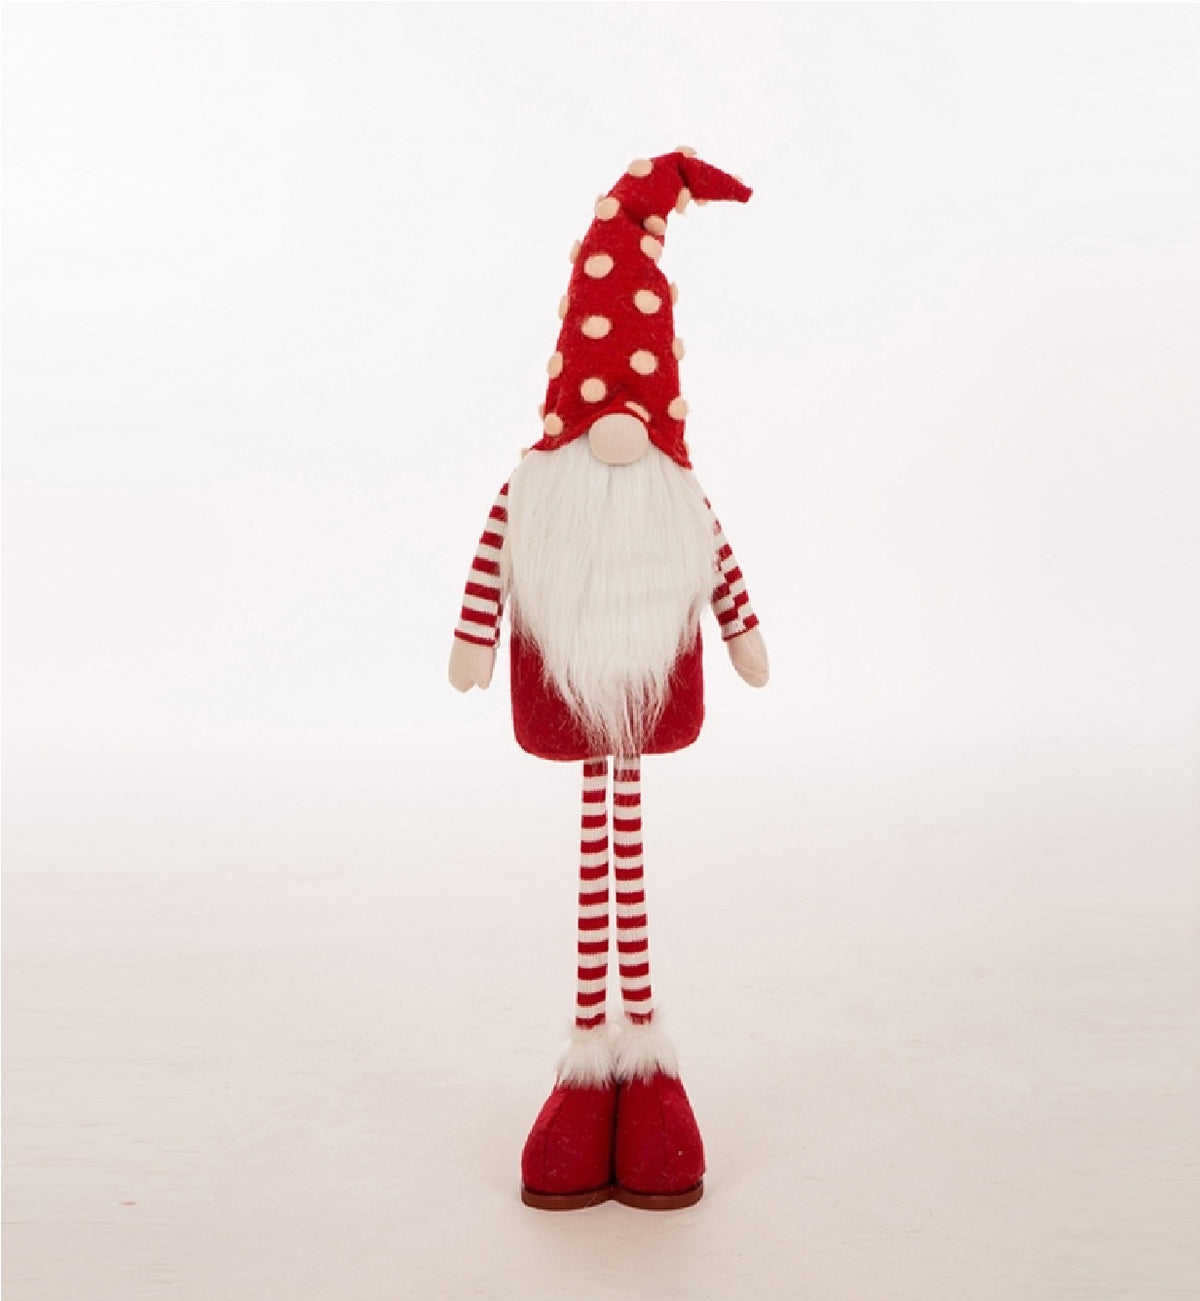 Celebrations JK47364 Standing Santa Christmas Gnome Figure, Red/White